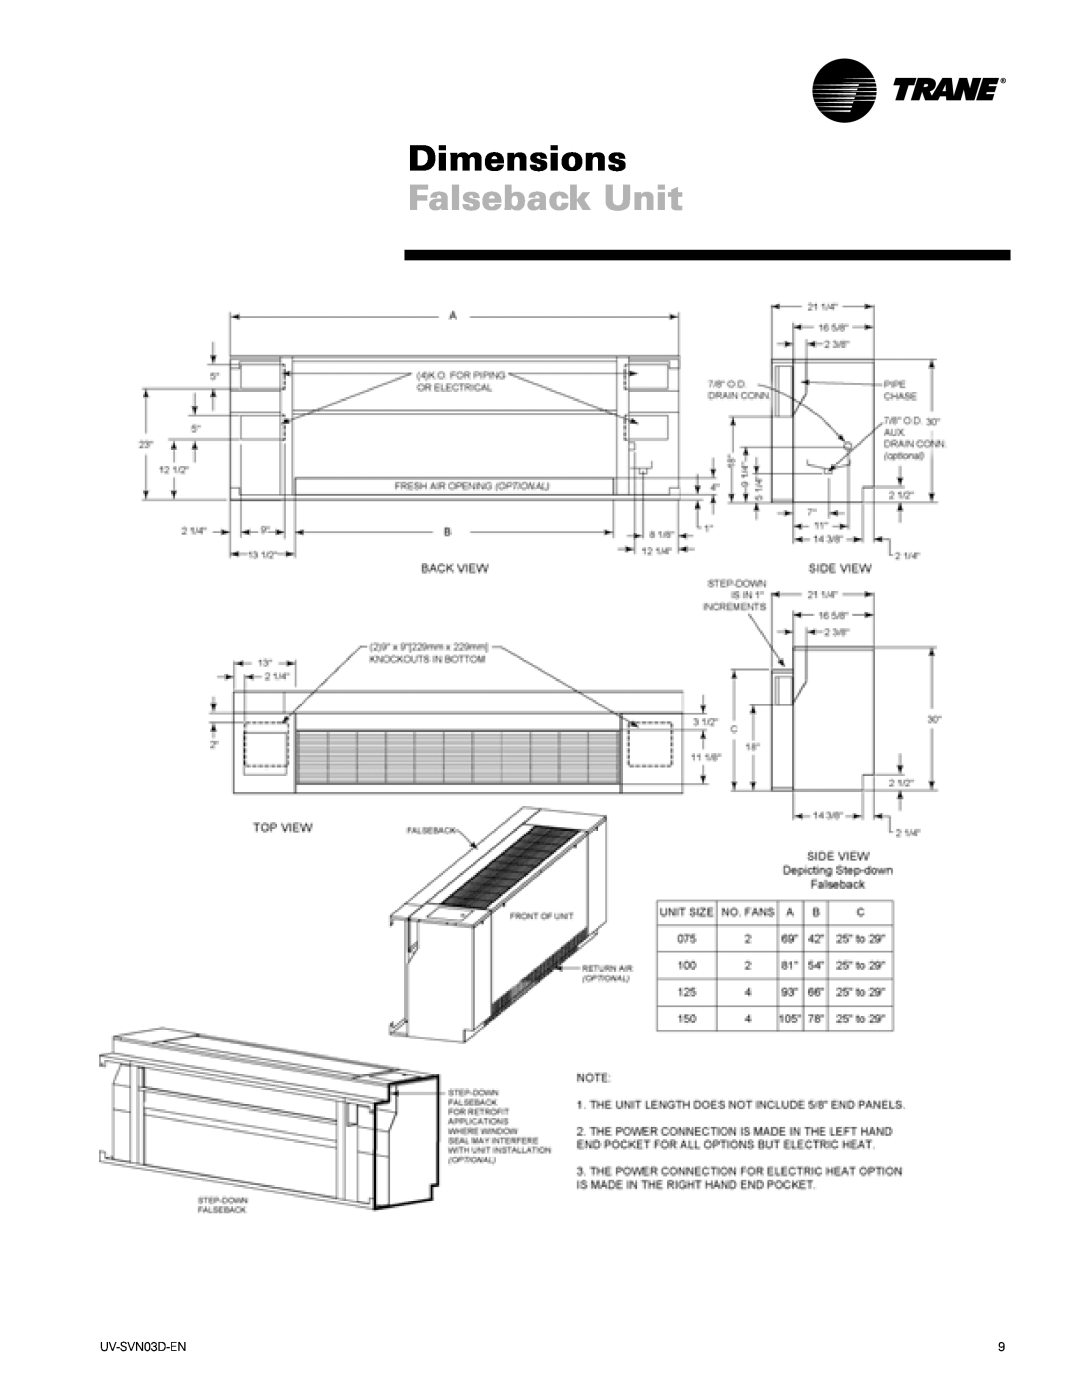 Trane 750 CFM, 1500 CFM manual Falseback Unit, Dimensions 